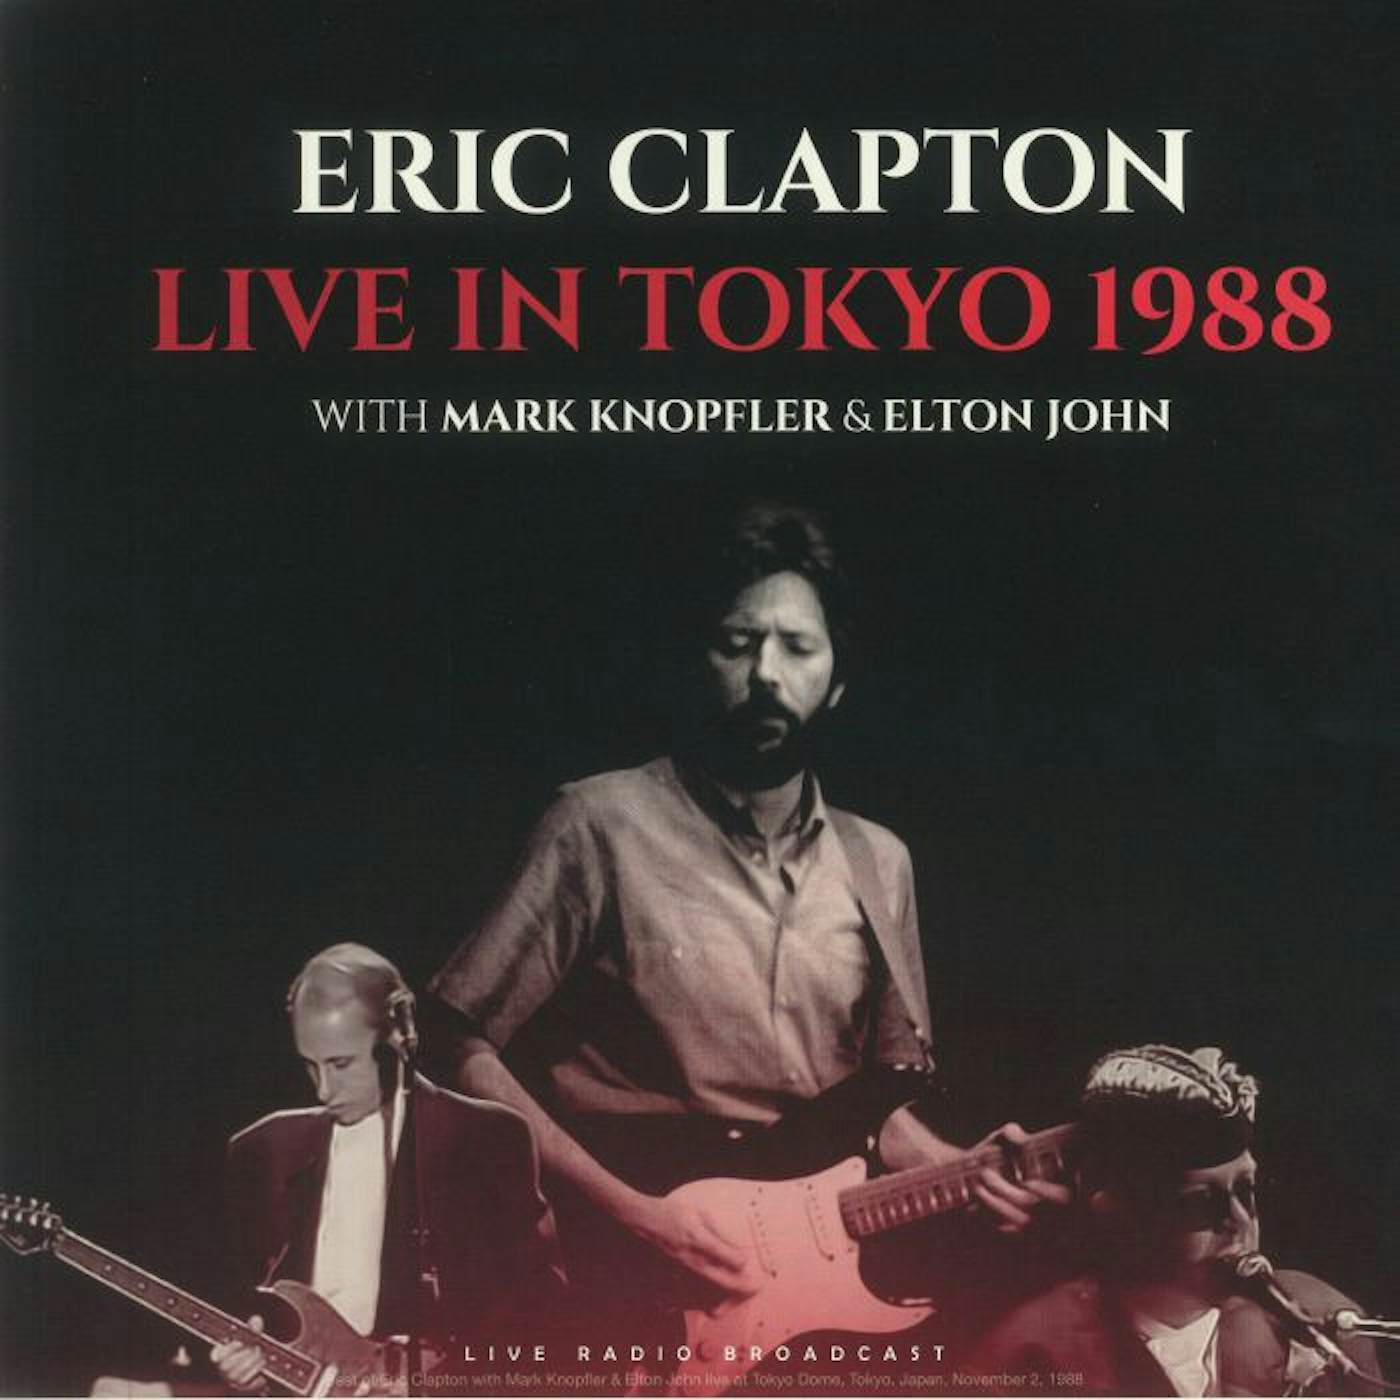 Eric Clapton / Mark Knopfler / Elton John LP Vinyl Record - Live In Tokyo 19 88